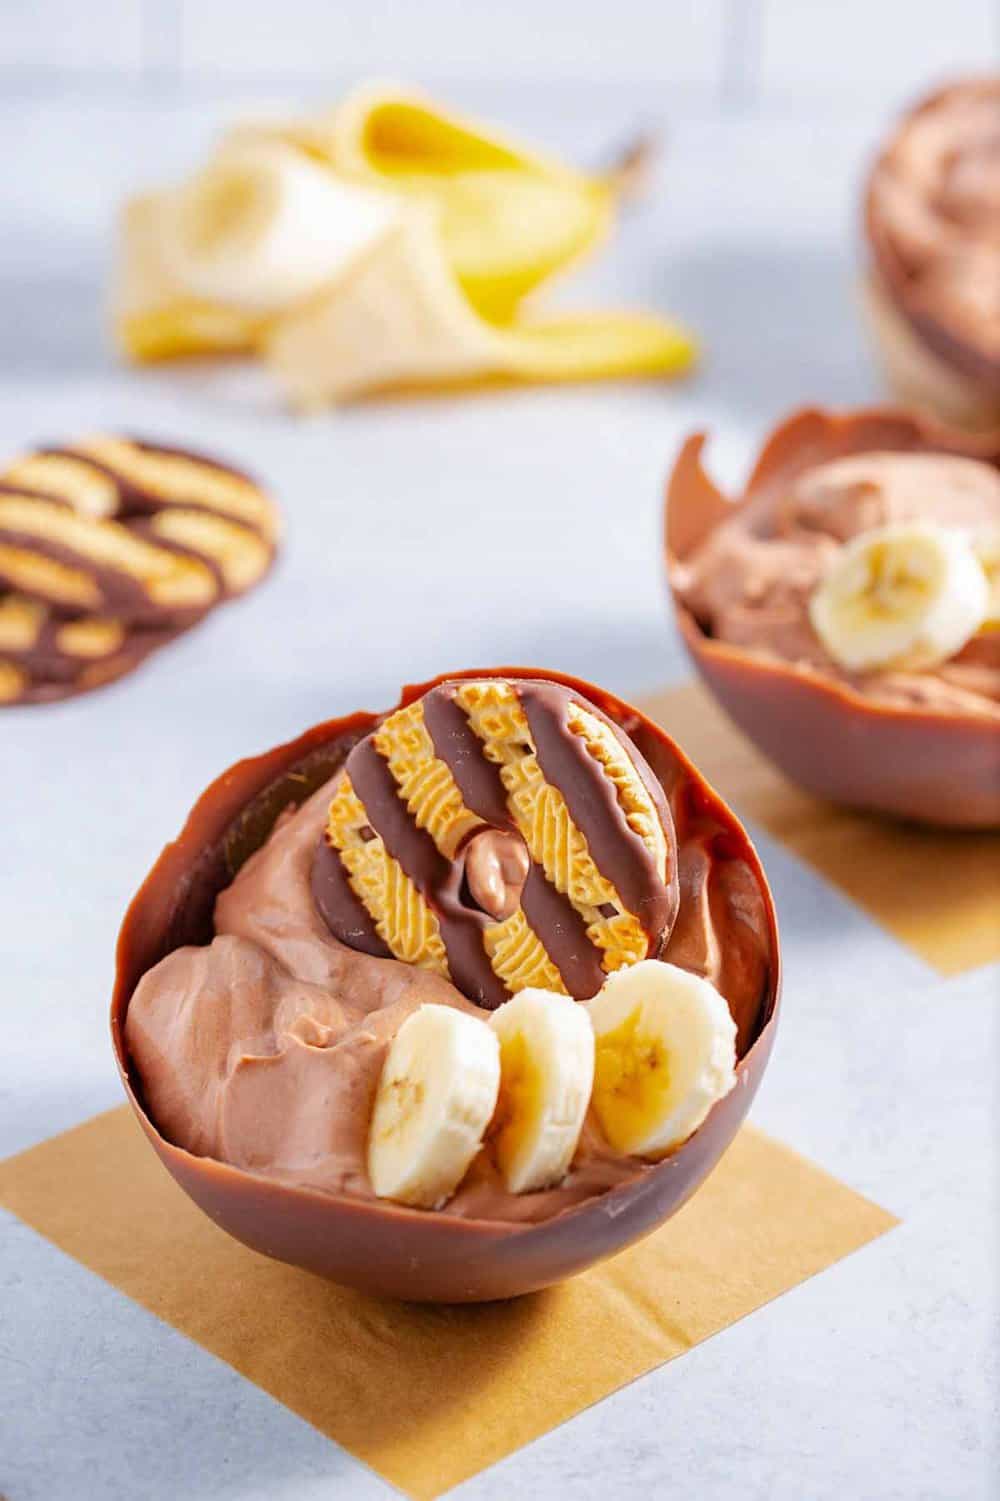 Chocolate banana pudding in a chocolate bowl.